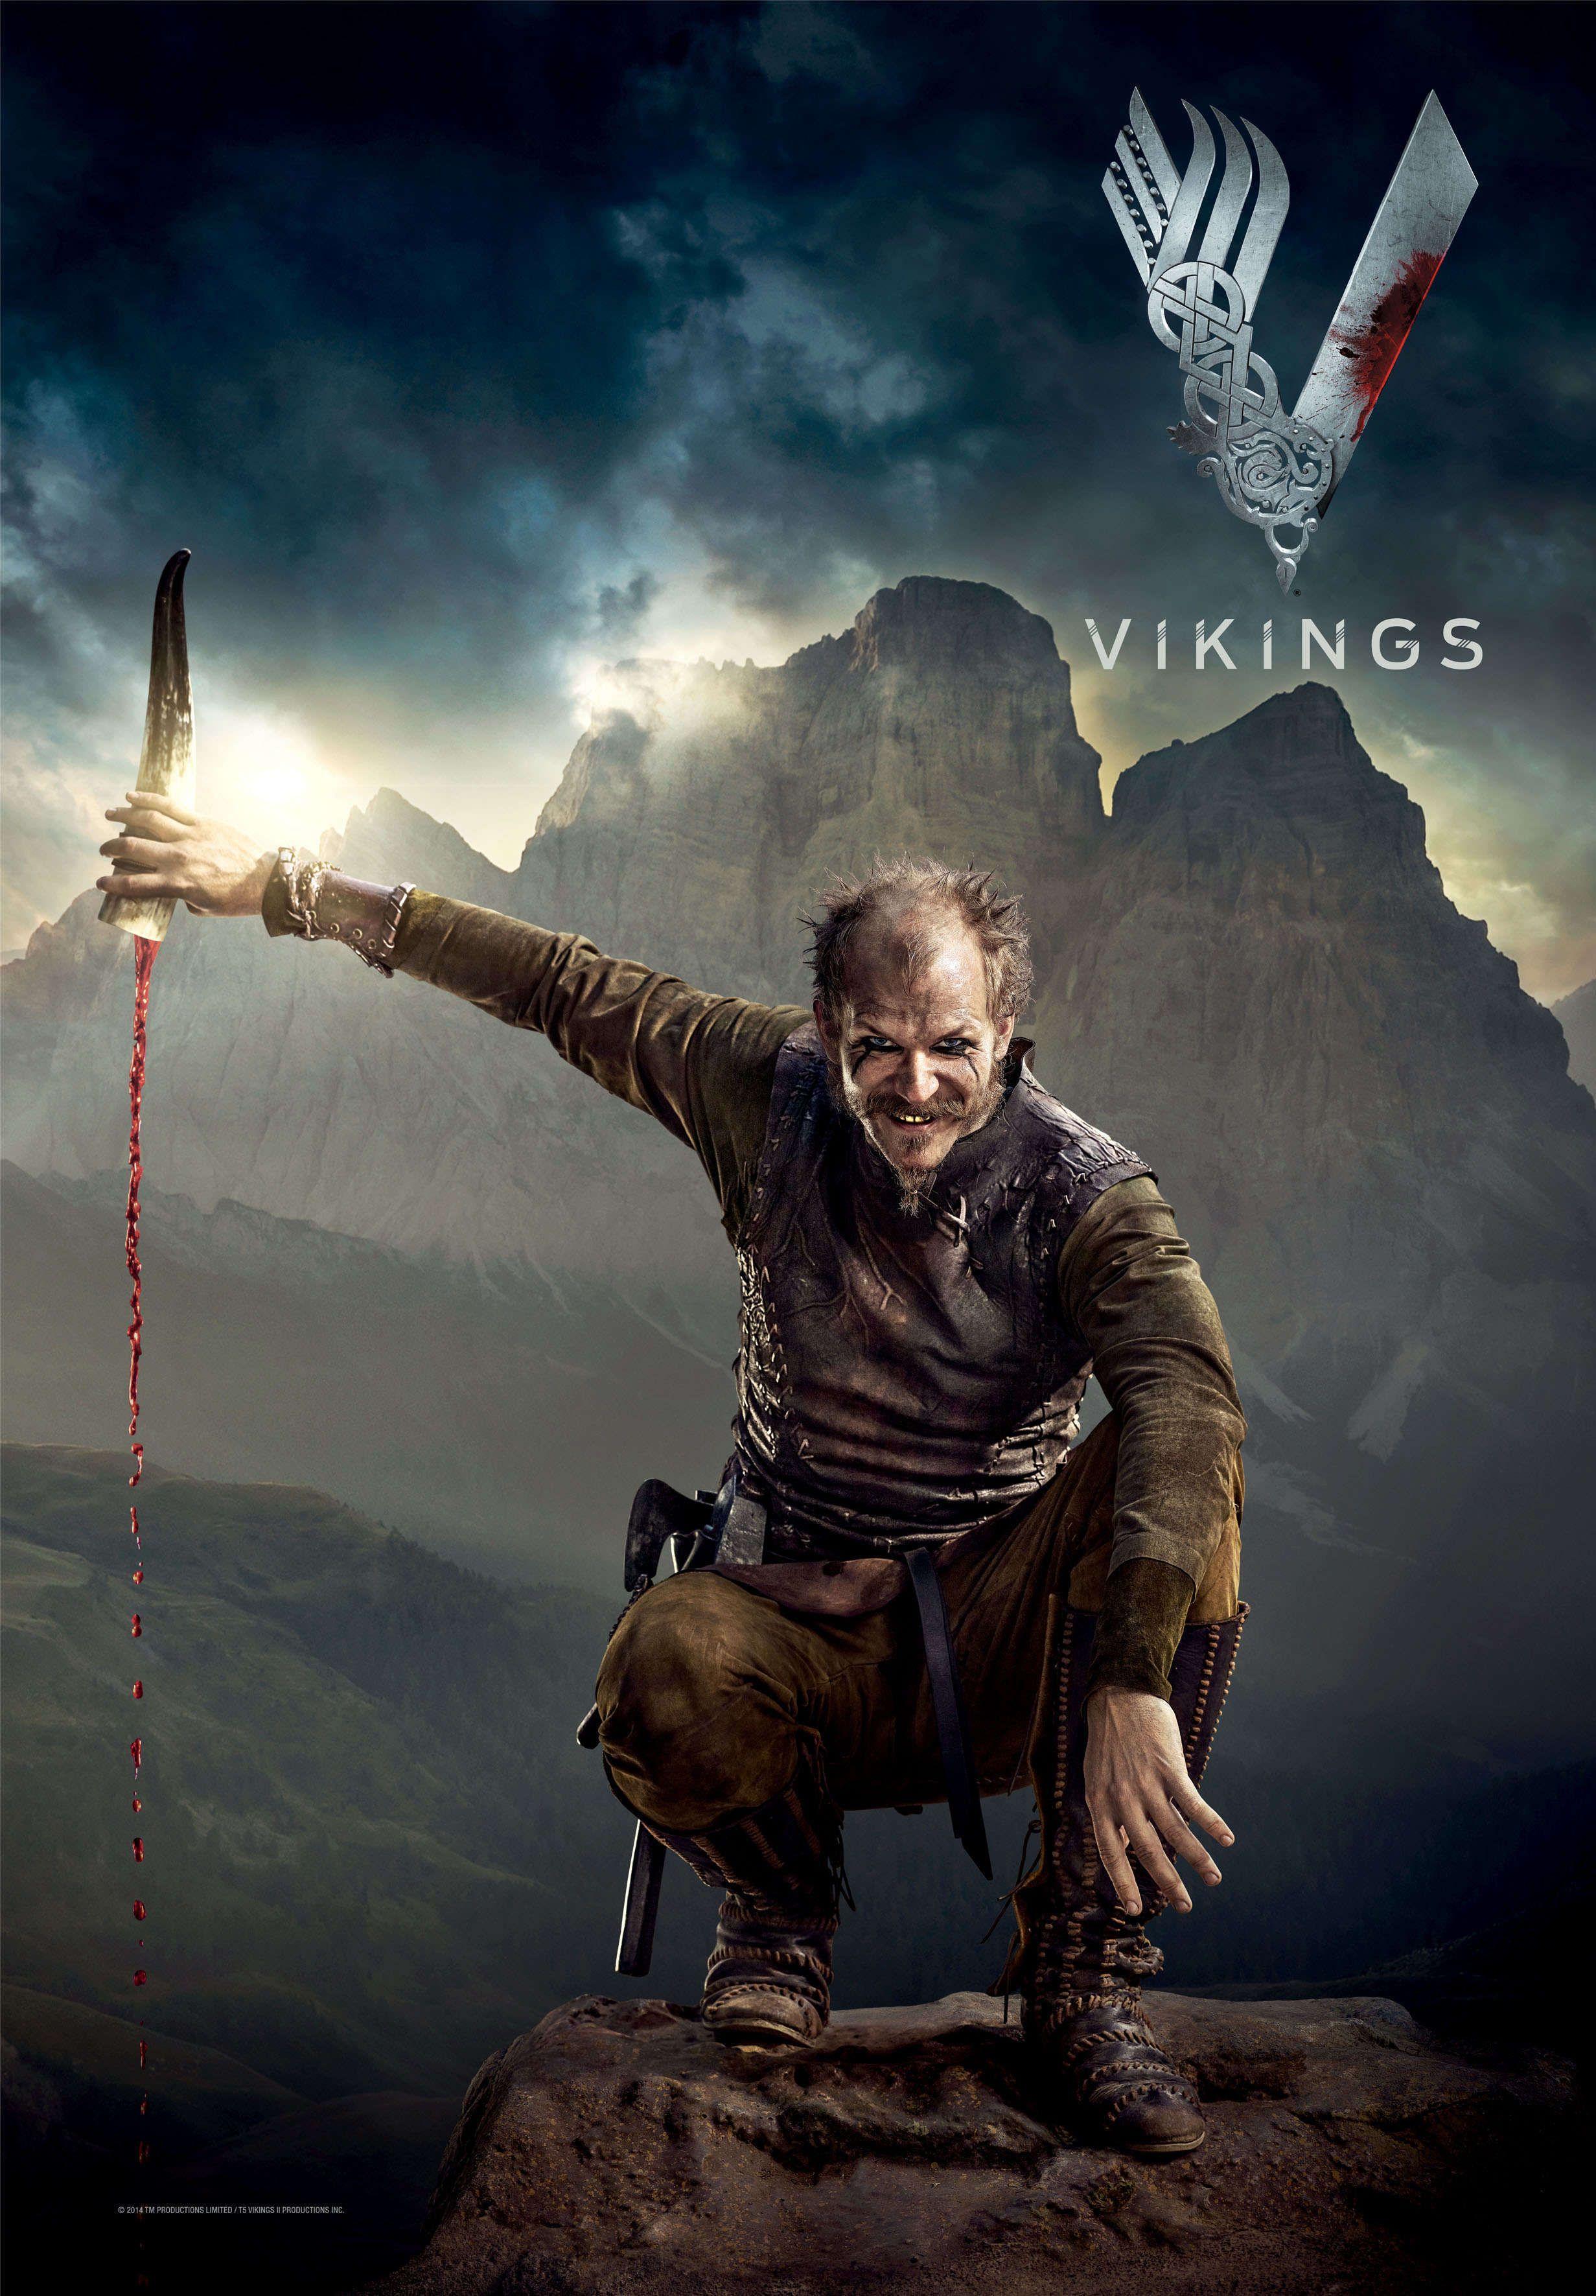 Vikings S2 Gustaf Skarsgard As Floki. Vikings 2013 2019